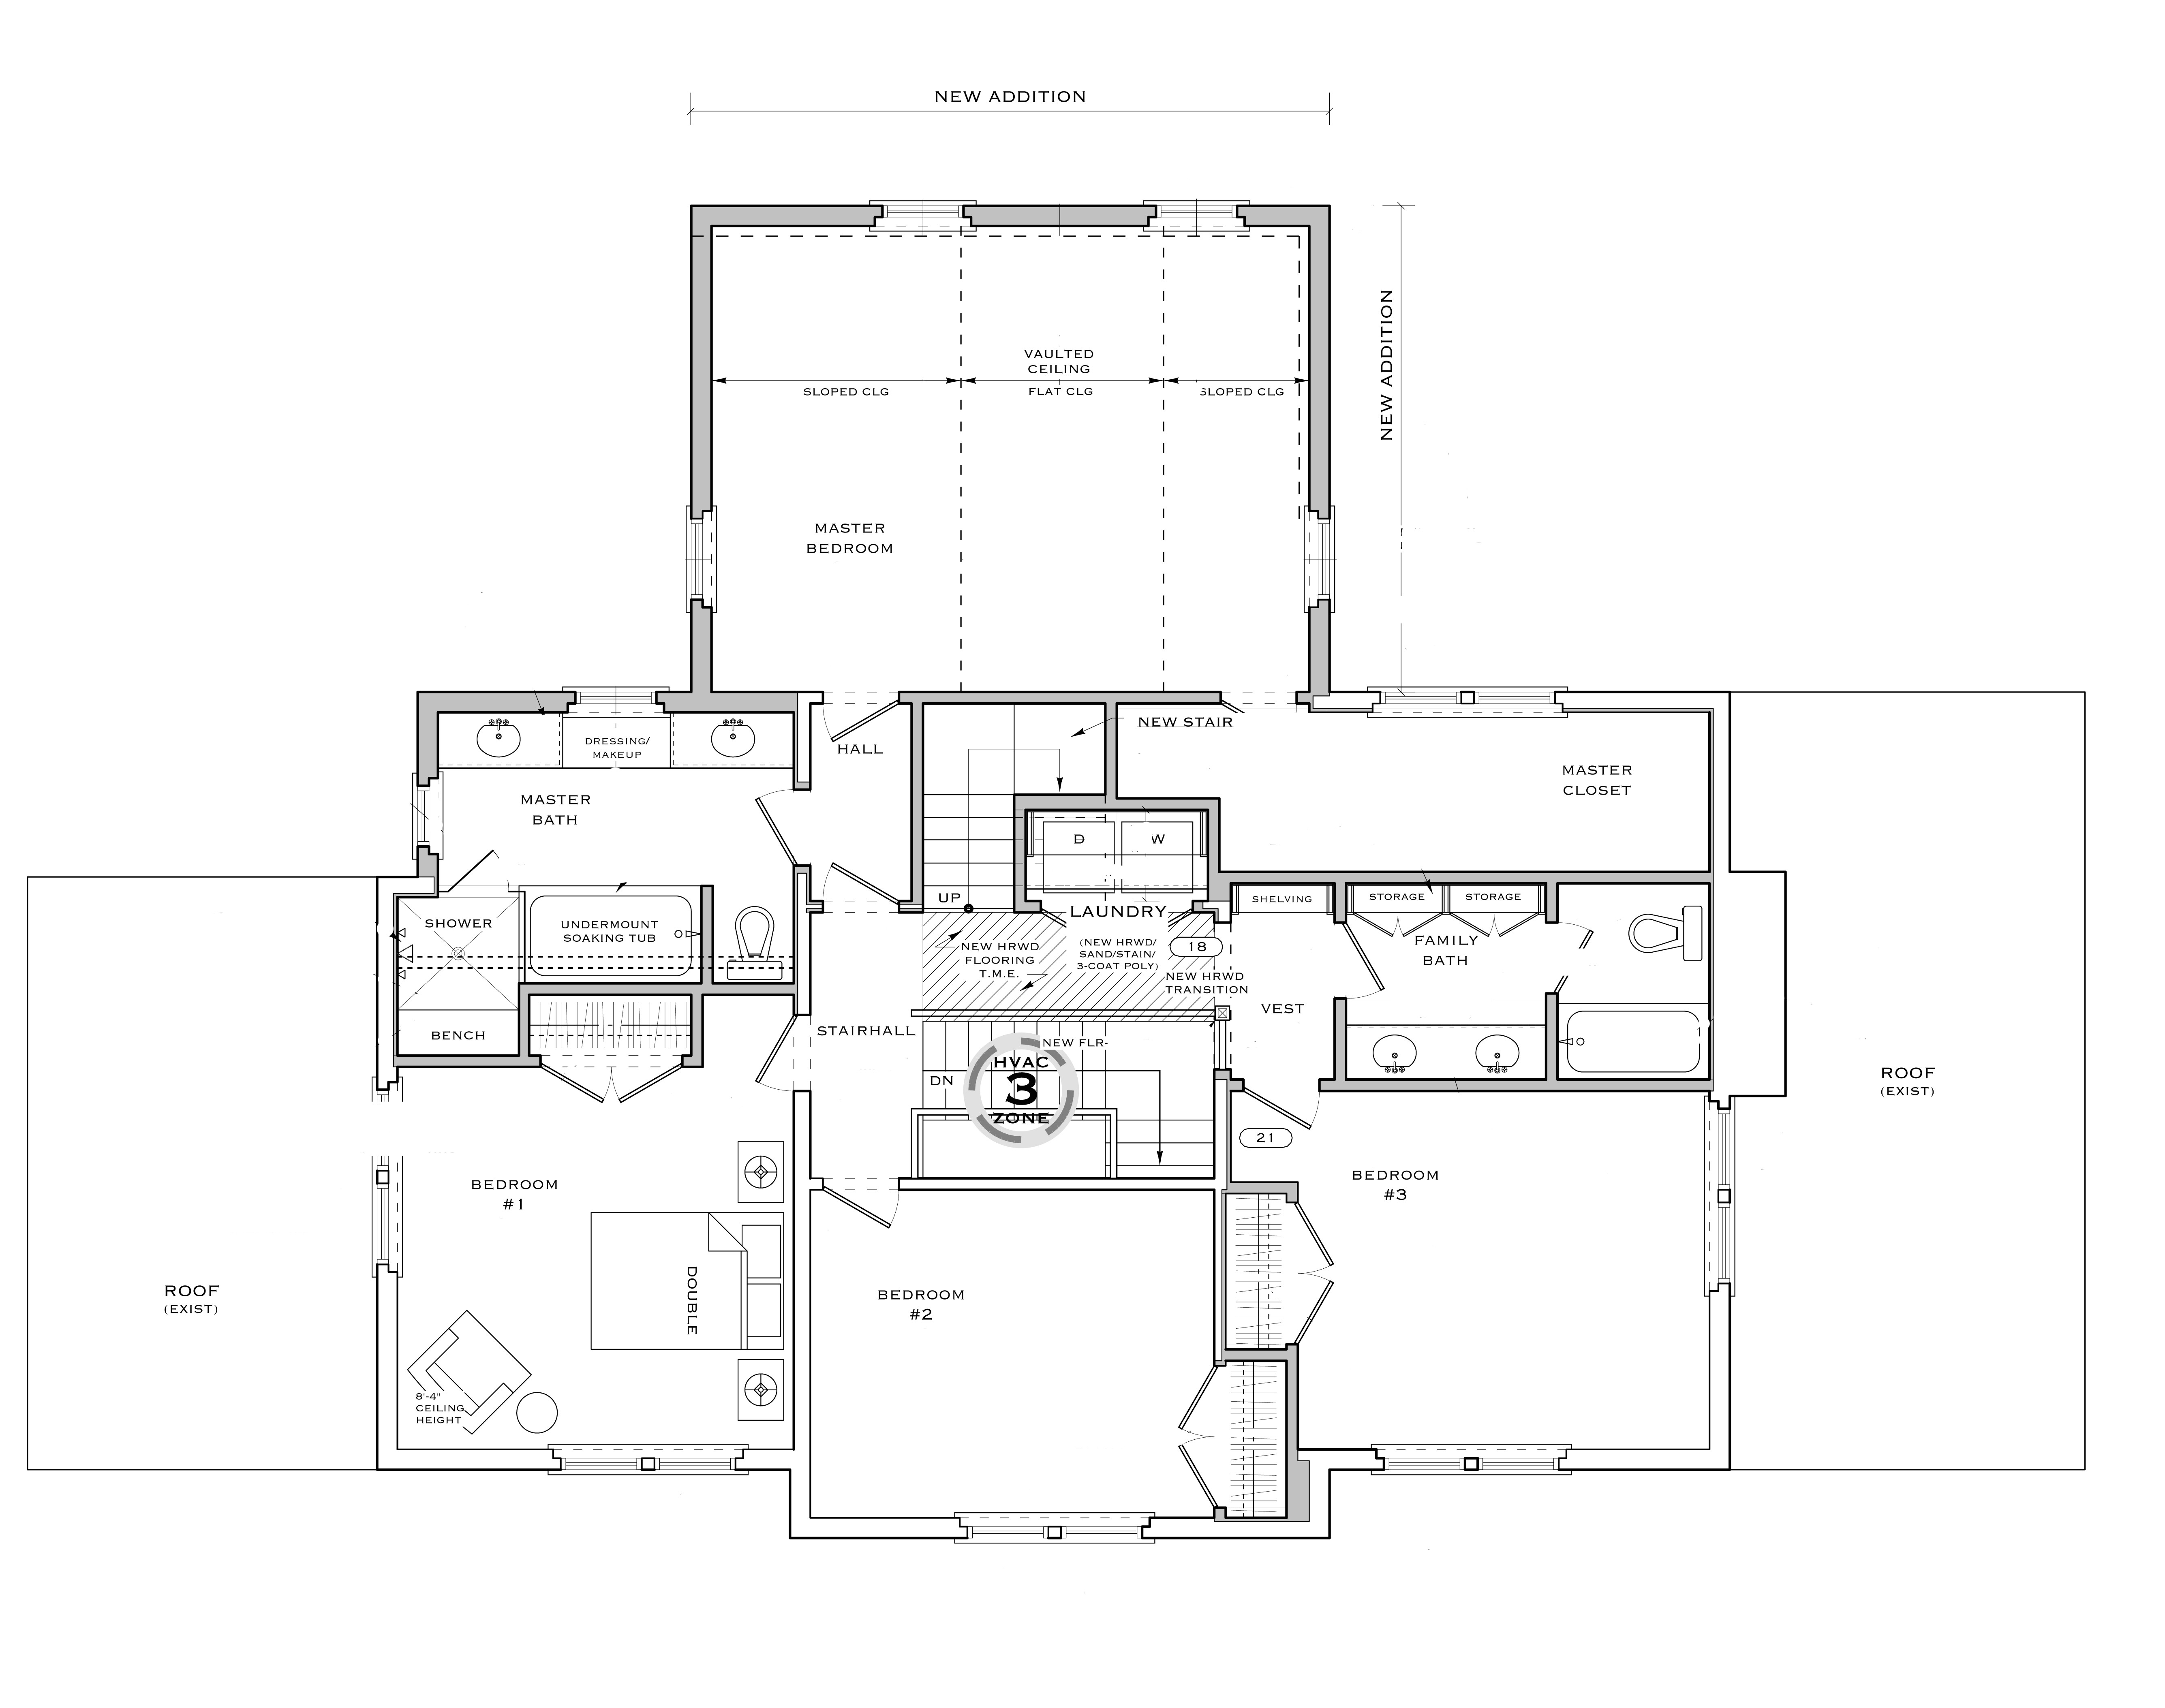 Home Renovation Plan Floor Plans